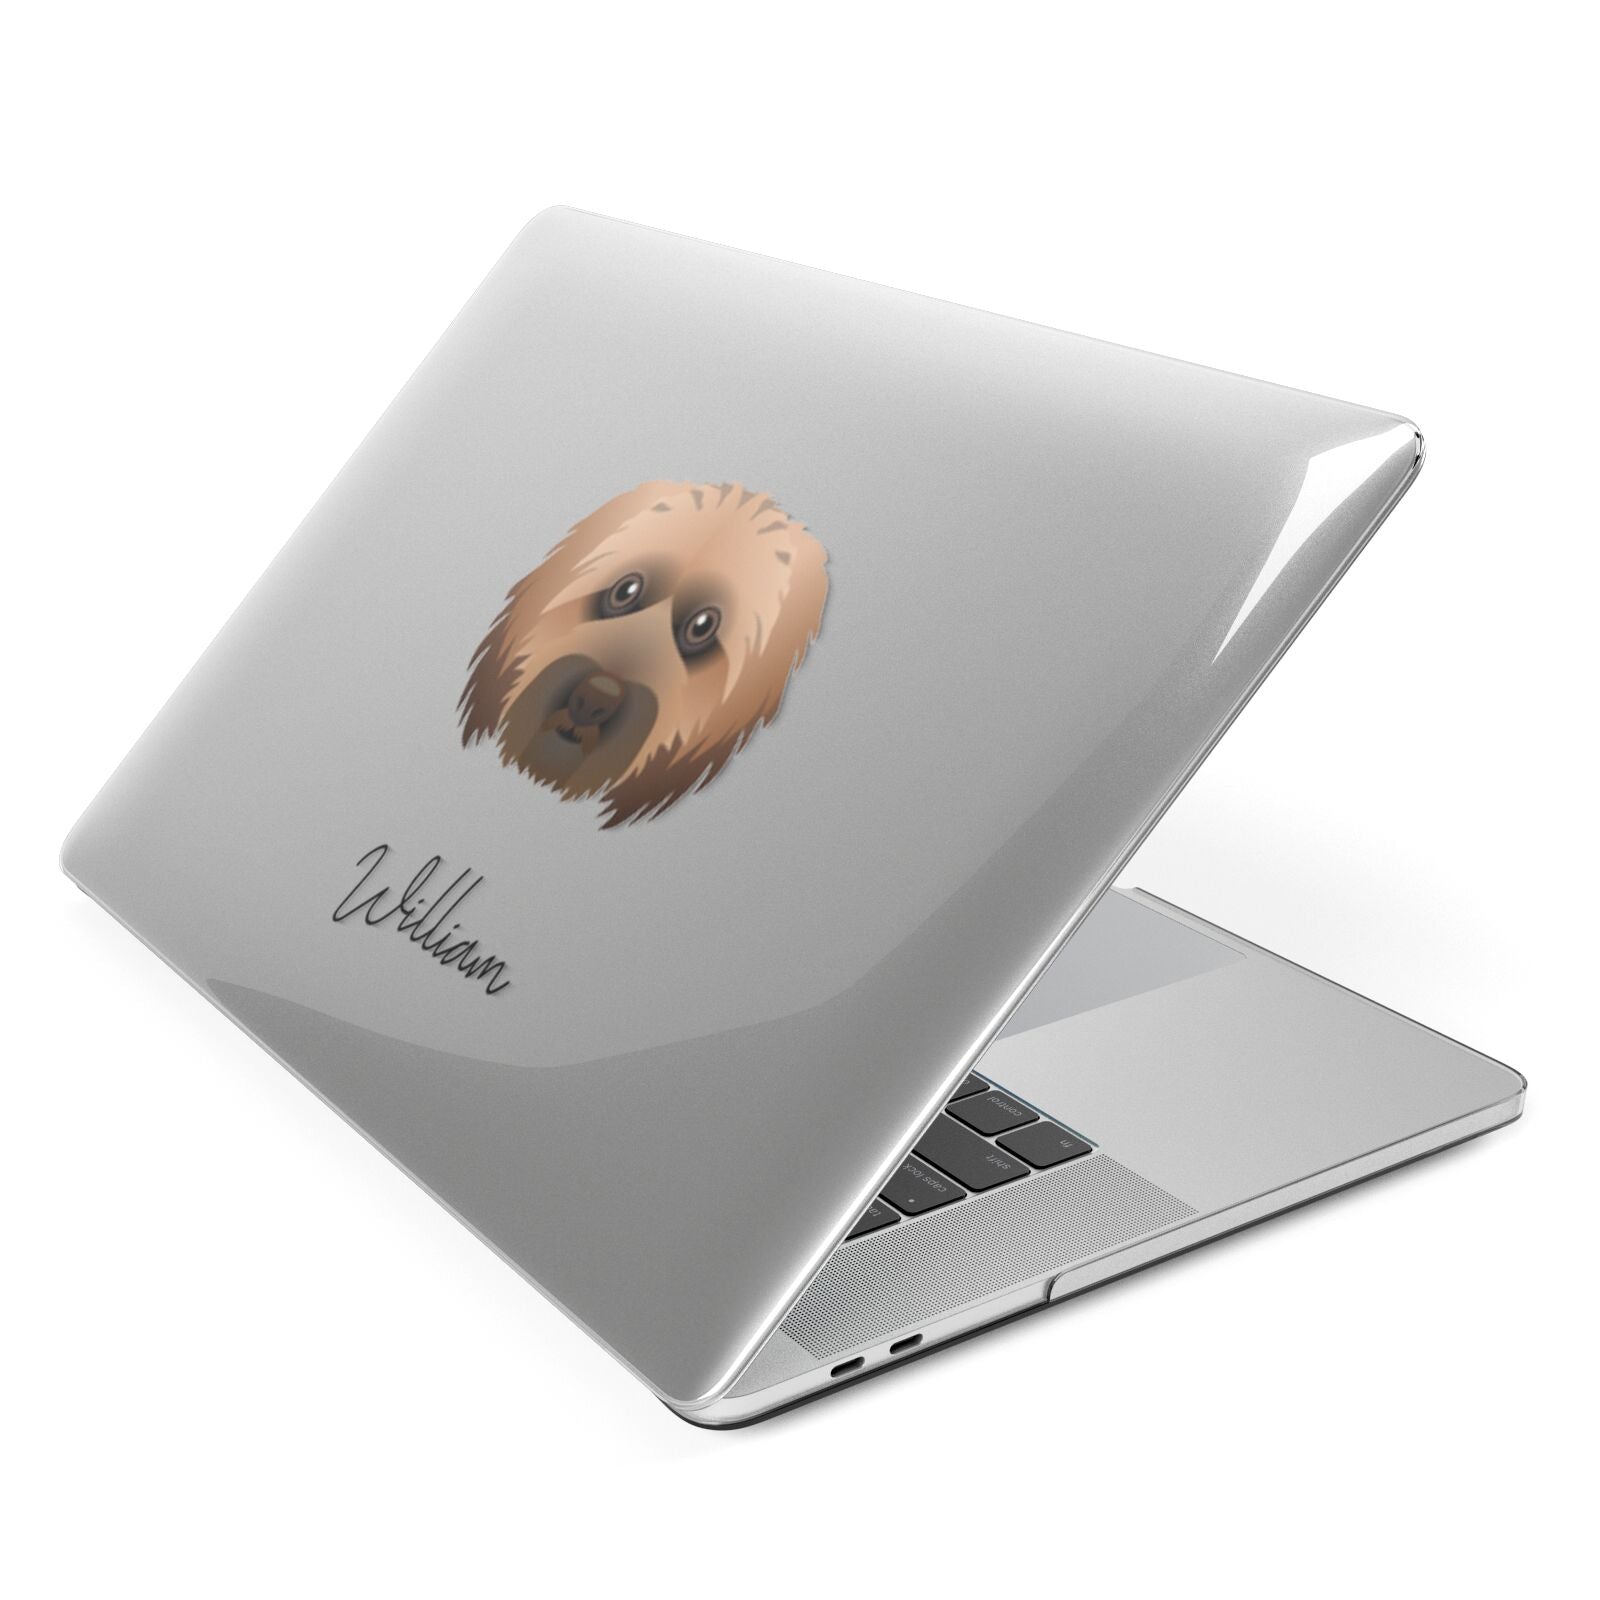 Doxiepoo Personalised Apple MacBook Case Side View